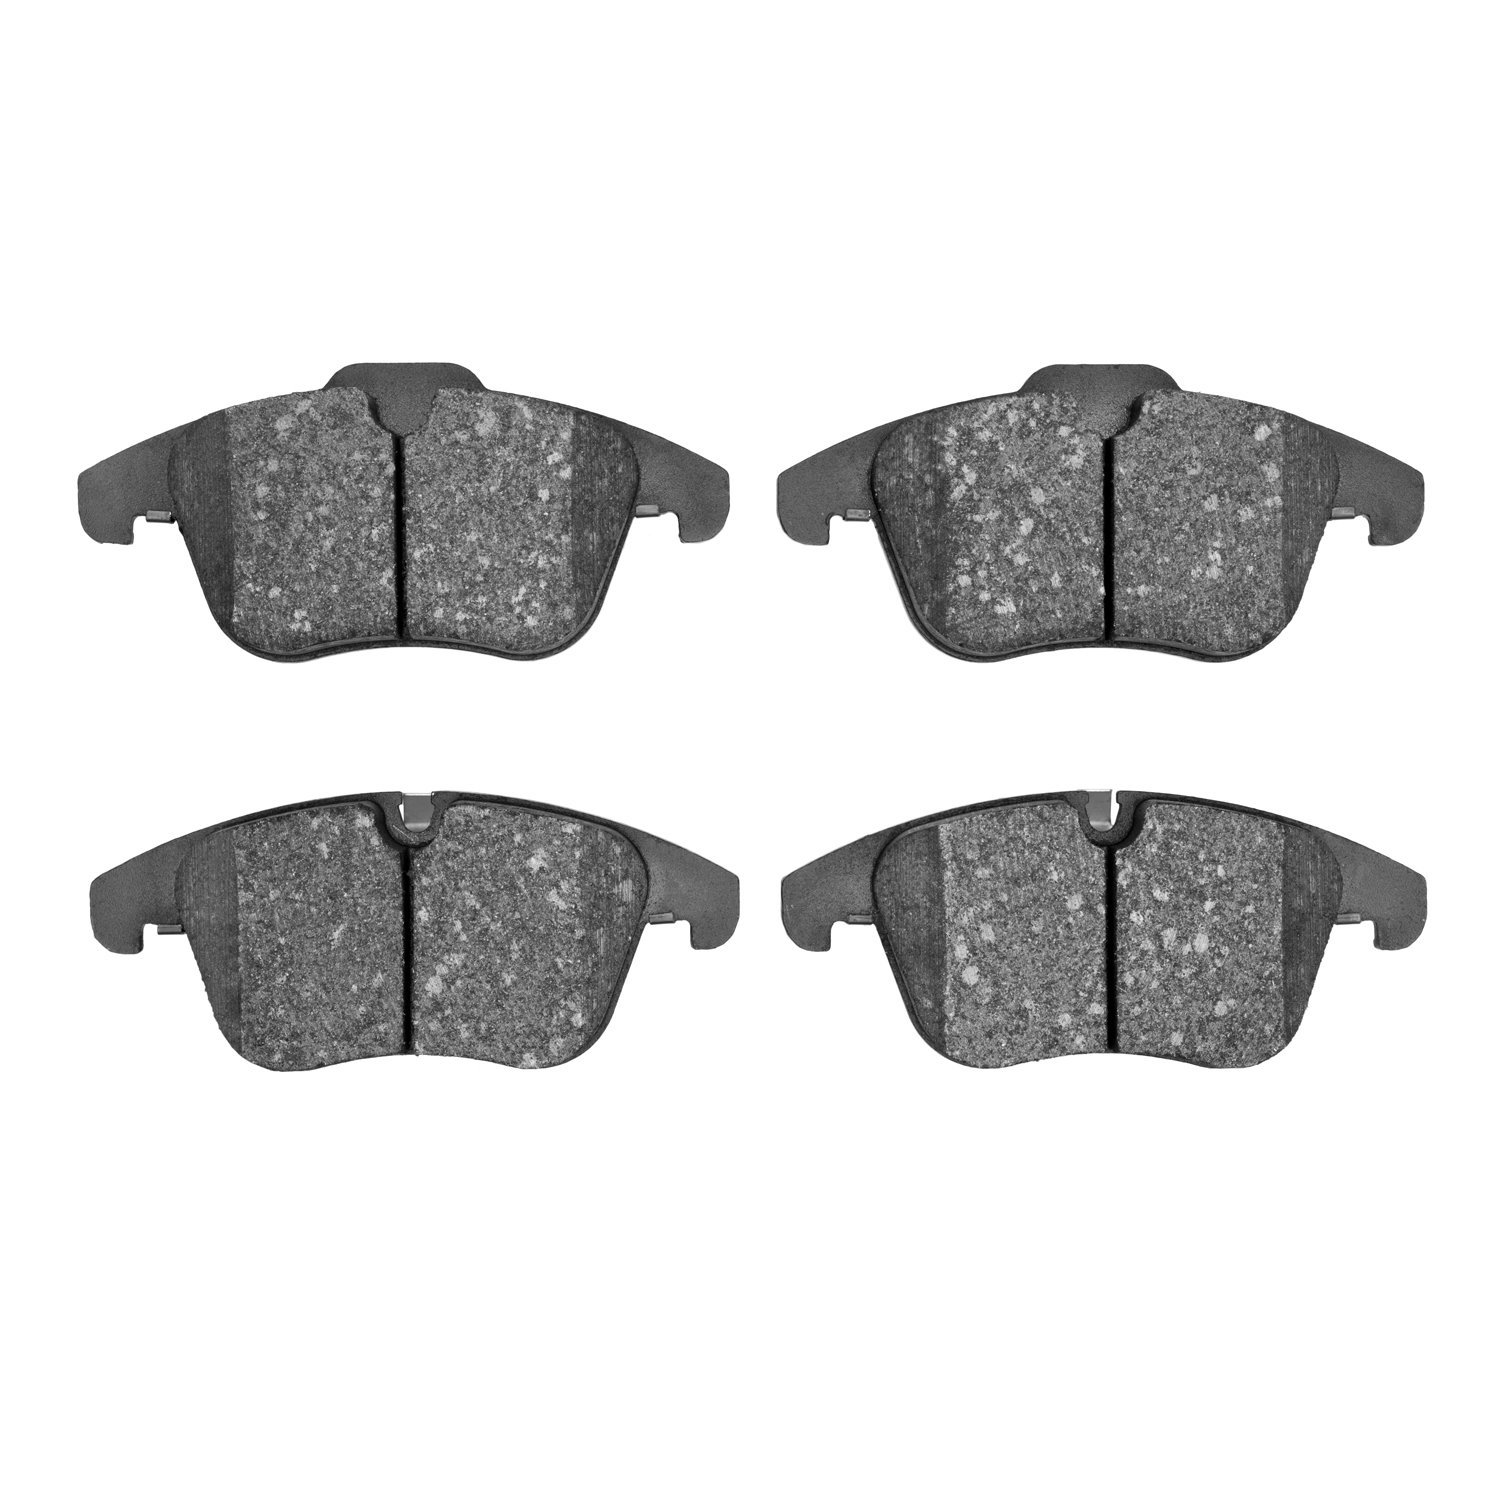 1600-1241-00 5000 Euro Ceramic Brake Pads, 2006-2018 Multiple Makes/Models, Position: Front